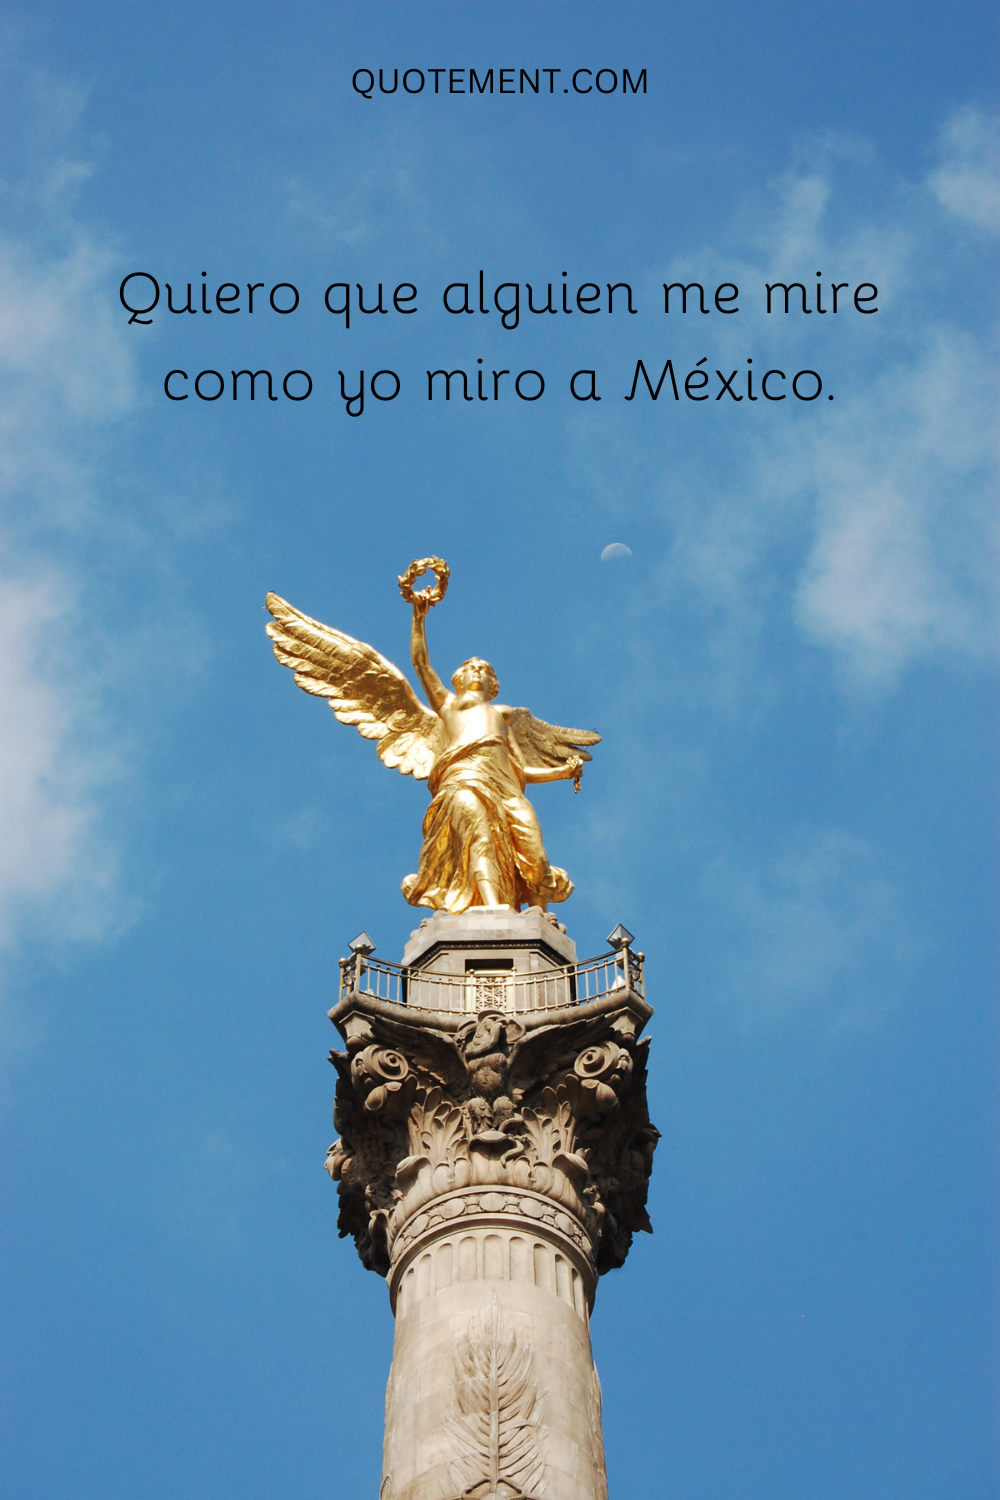 Quiero que alguien me mire como yo miro a México